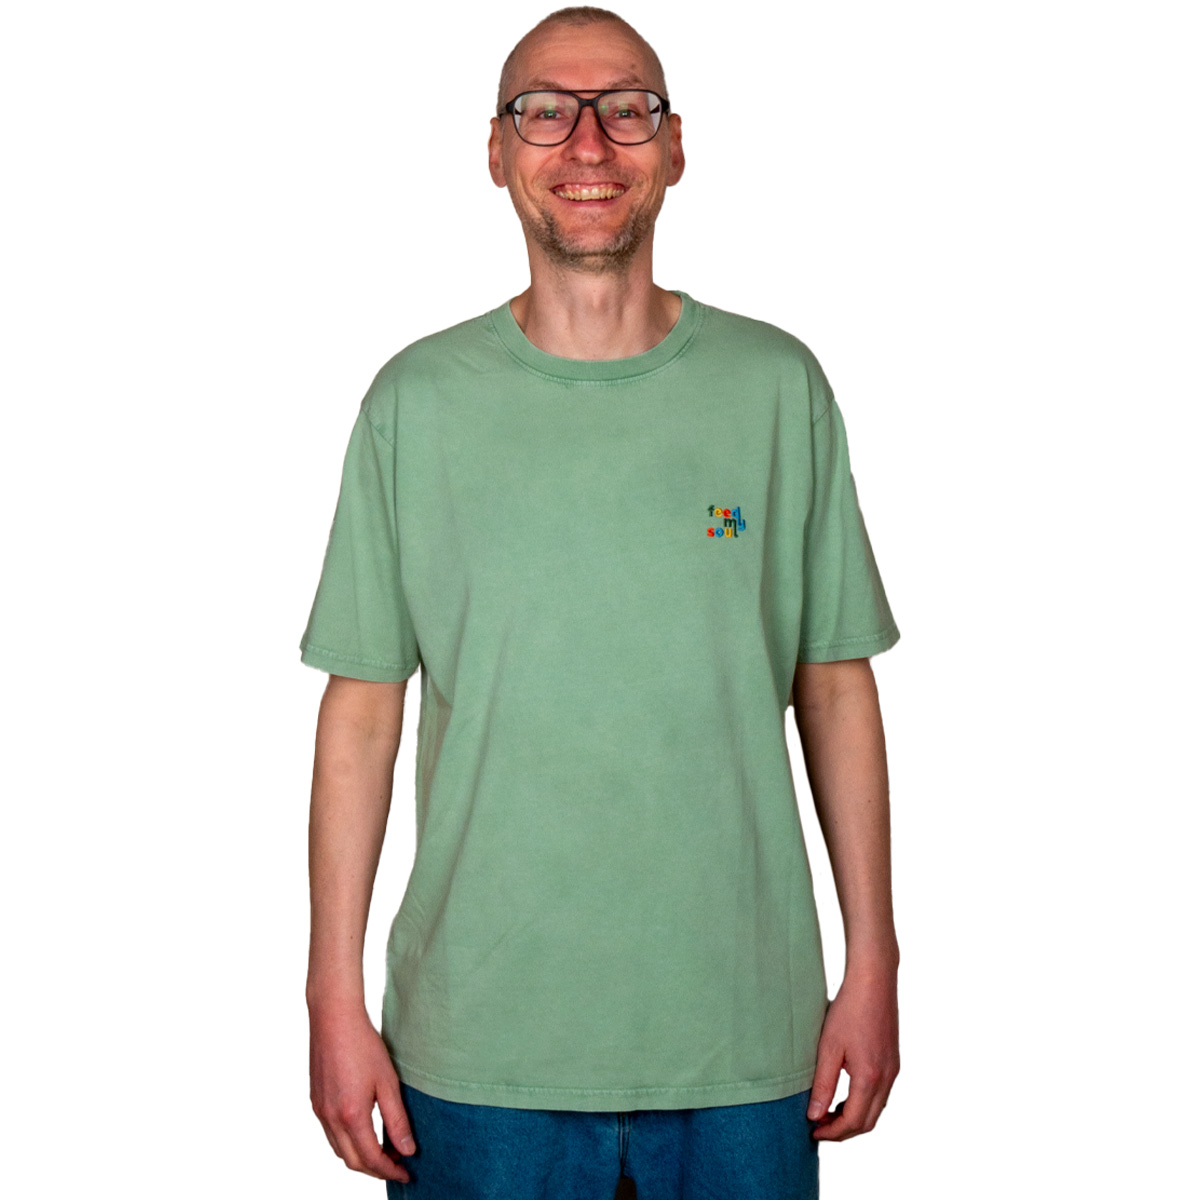 Feedmysoul T-Shirt Colour Emb (stone wash sage)